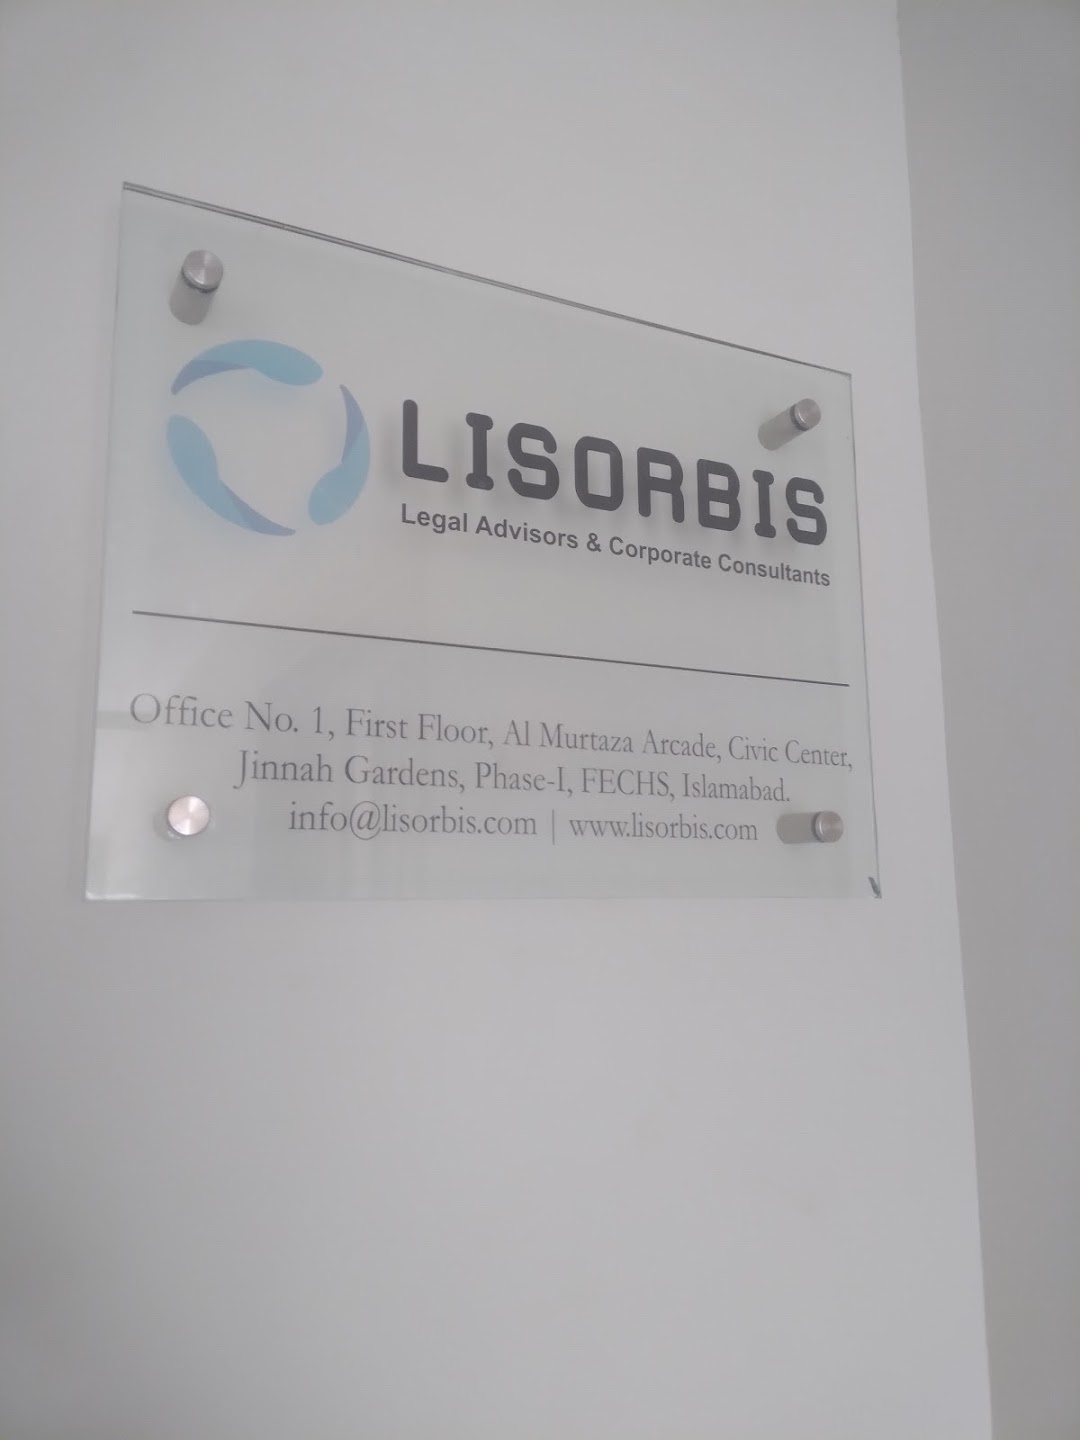 LISORBIS (Advocates &Corporate Consultants)